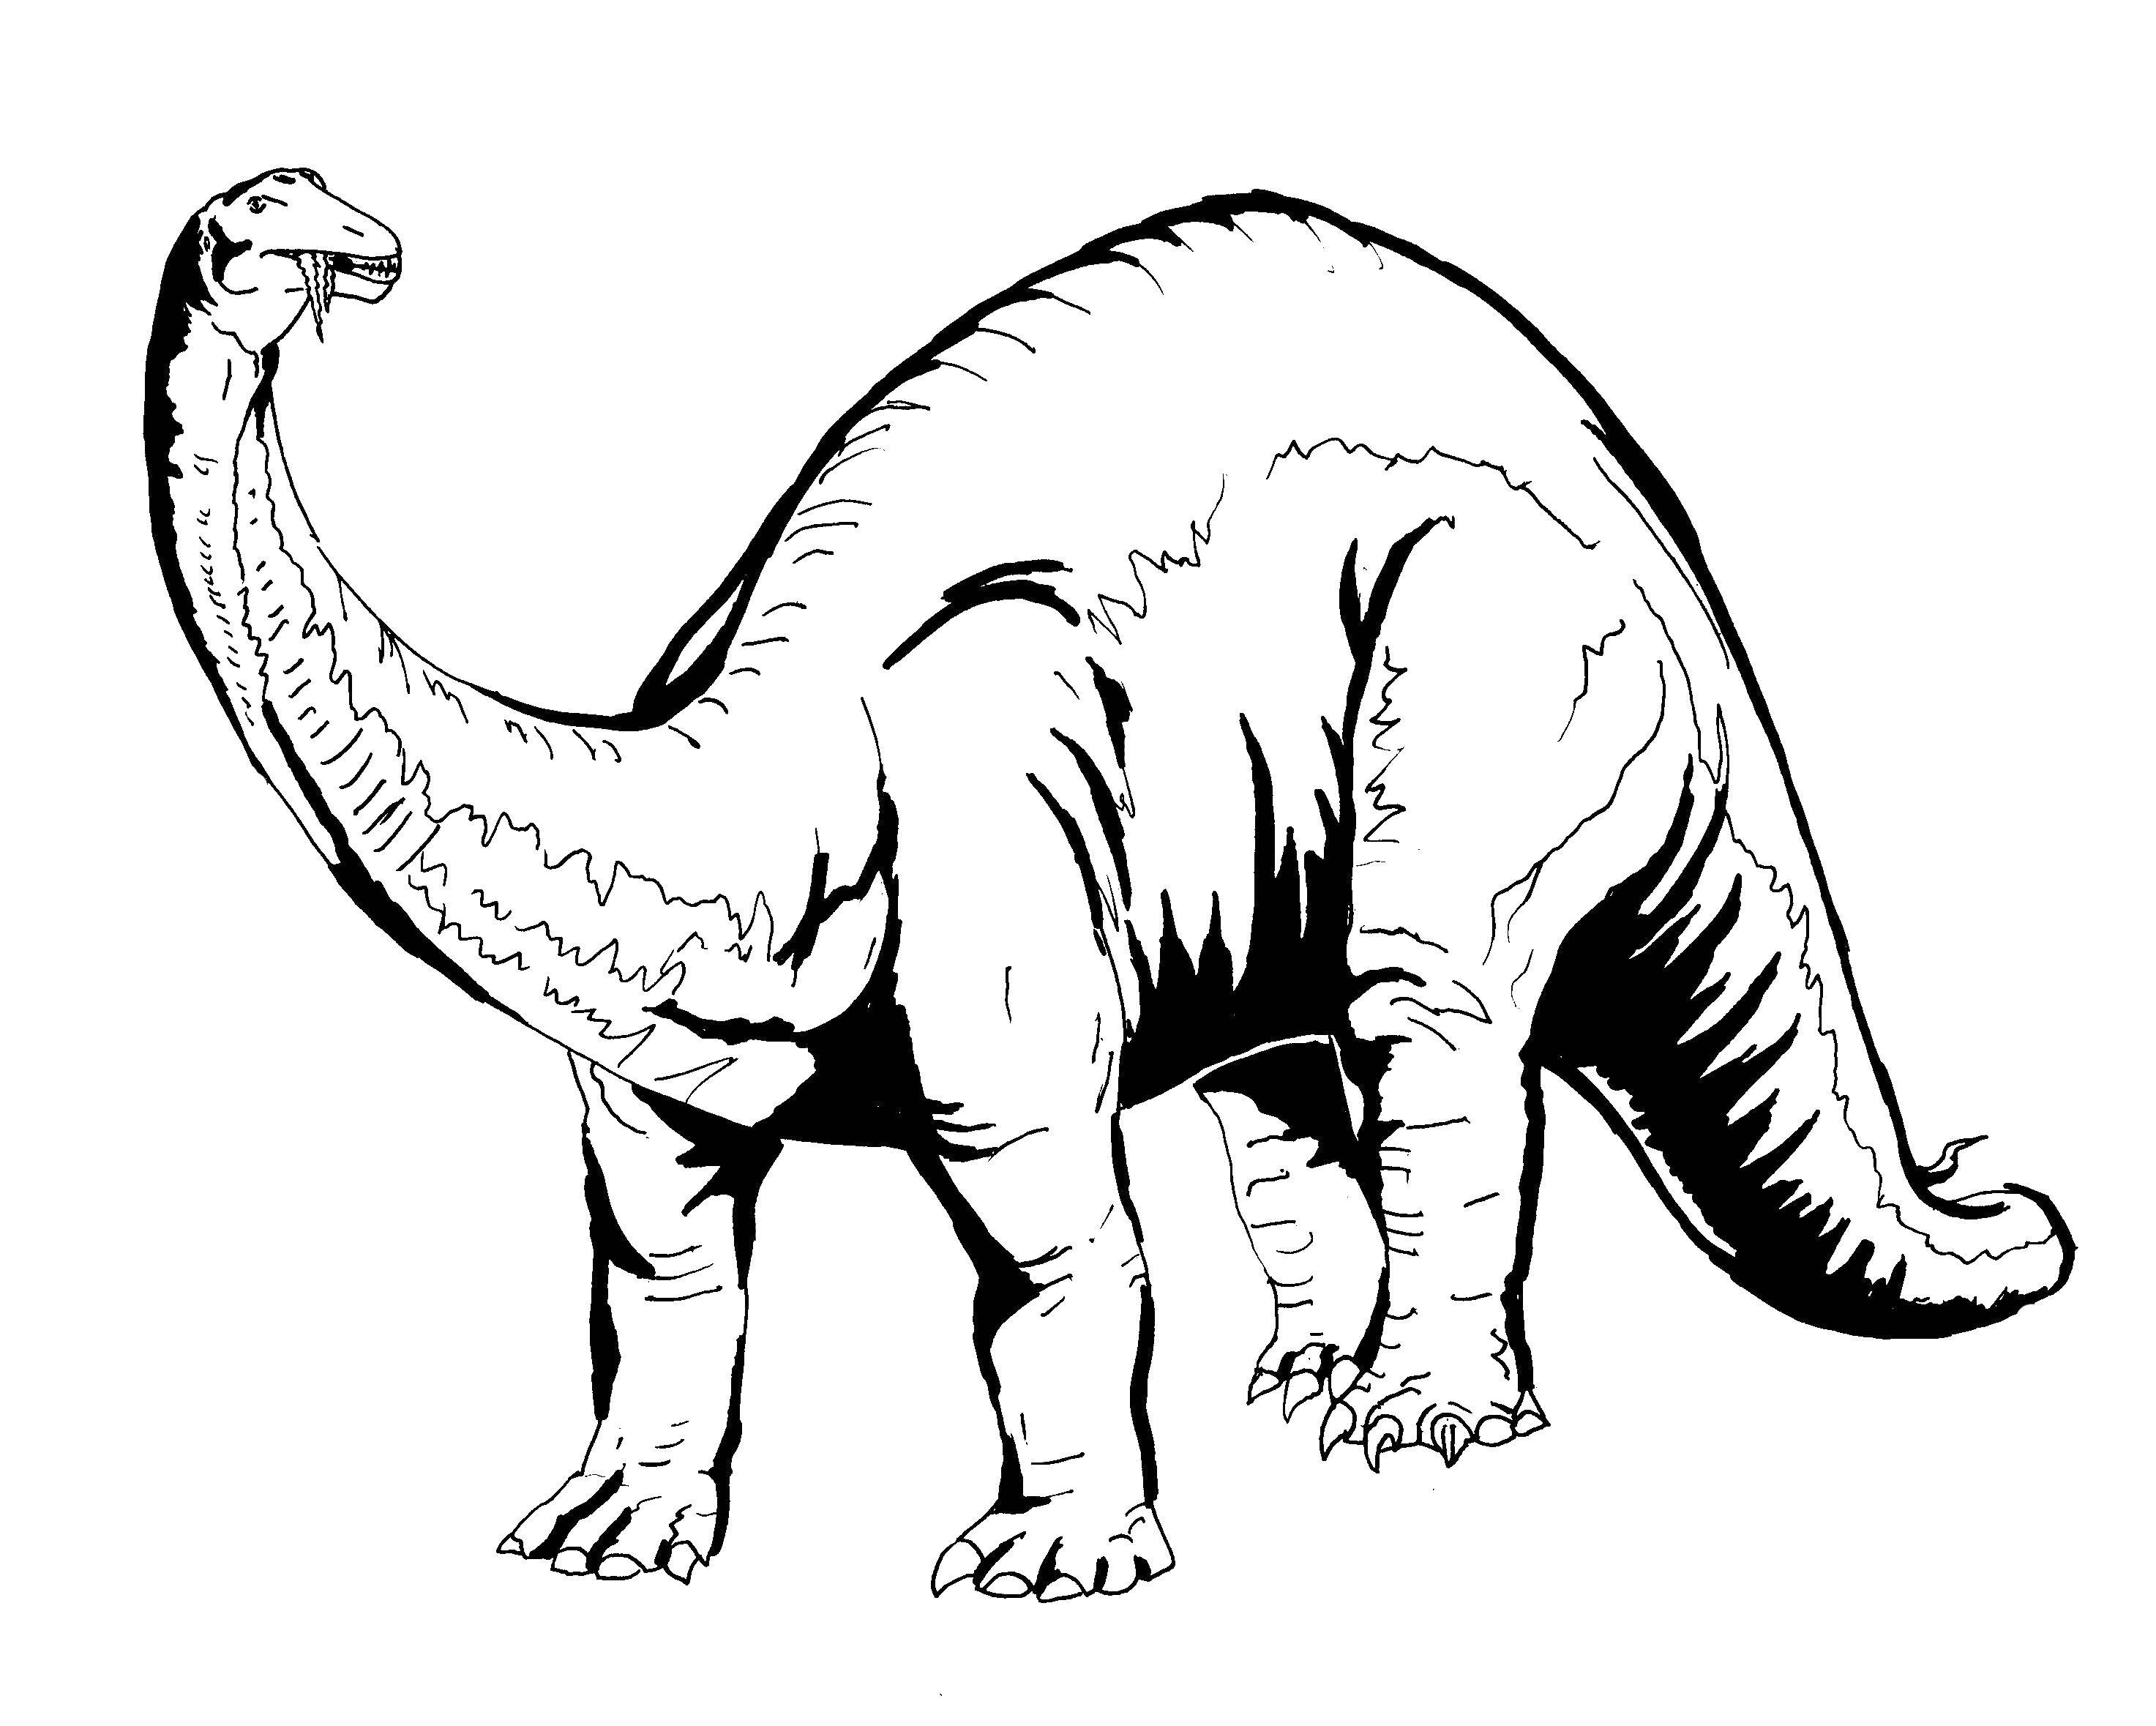 Coloring Diplodocus. Category dinosaur. Tags:  Dinosaurs.